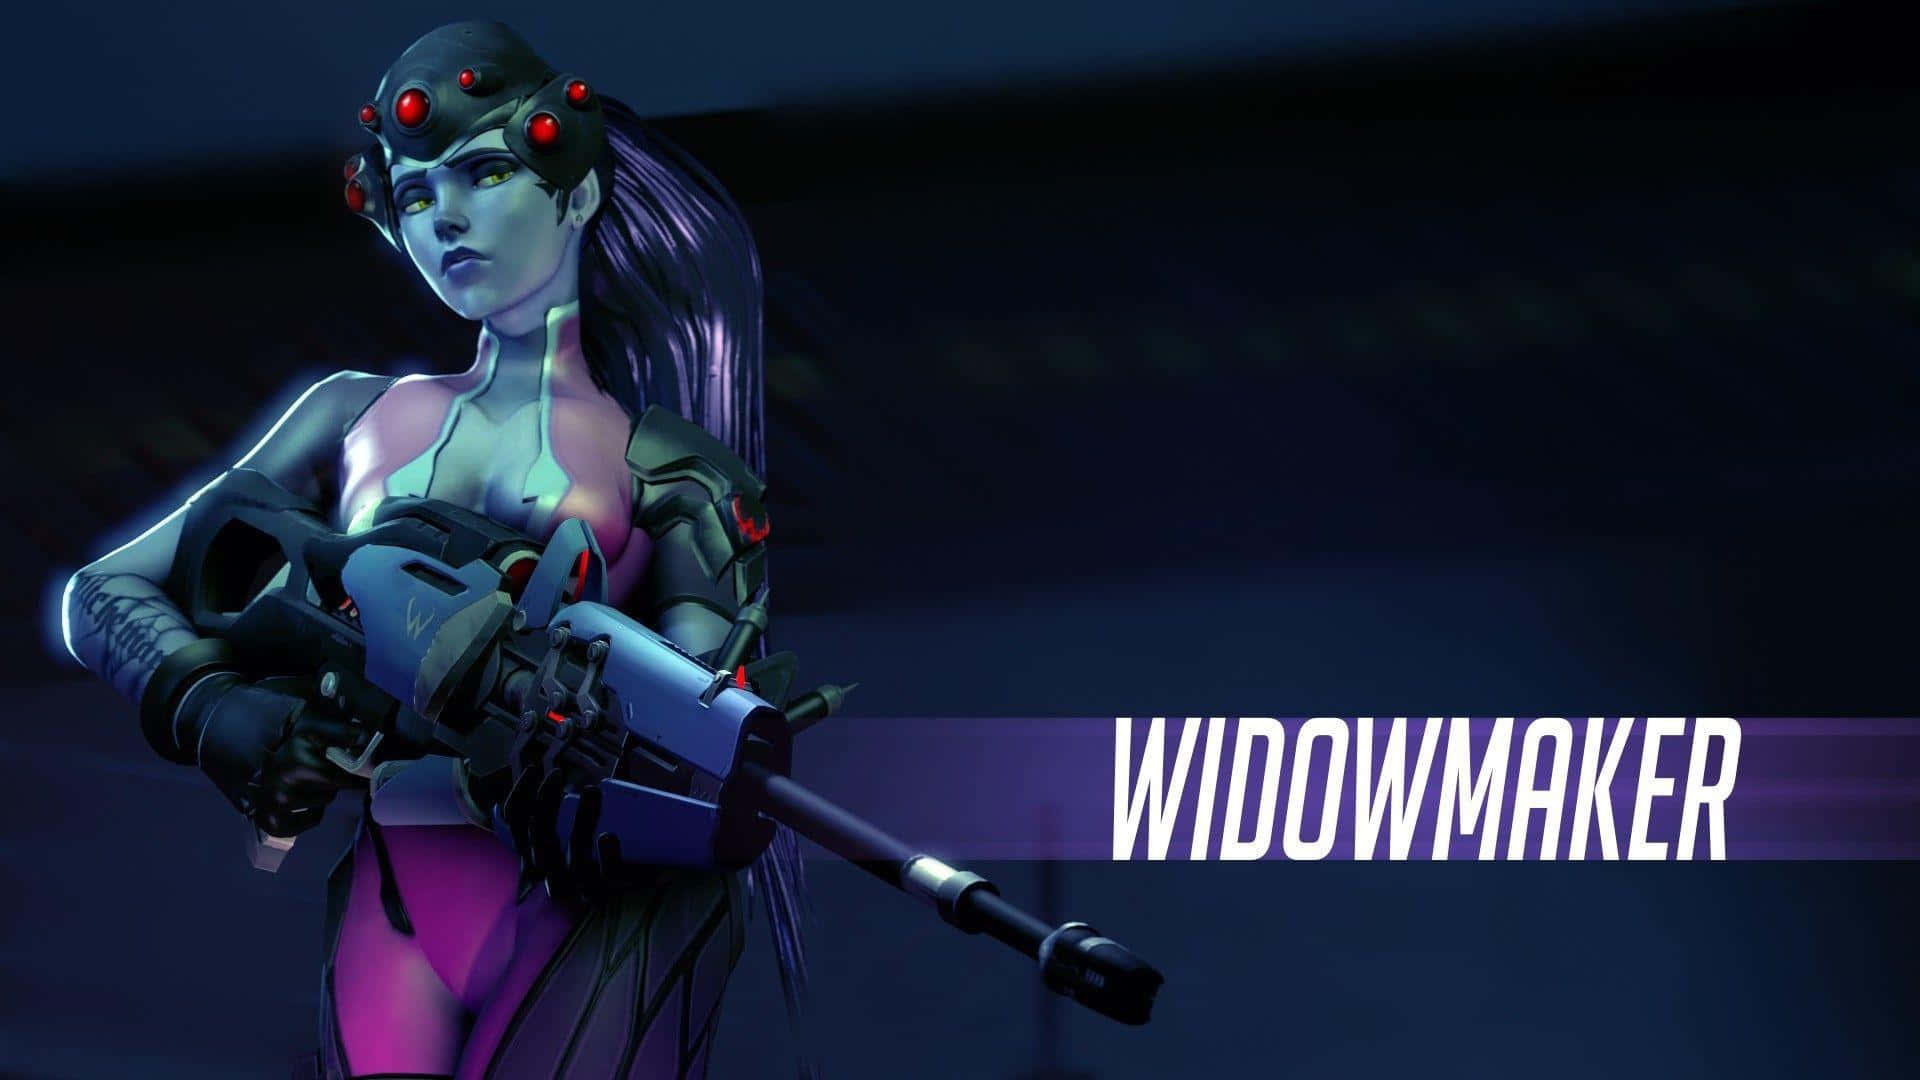 "Deadly Precision - Widowmaker, the Sniper Assassin of Overwatch" Wallpaper